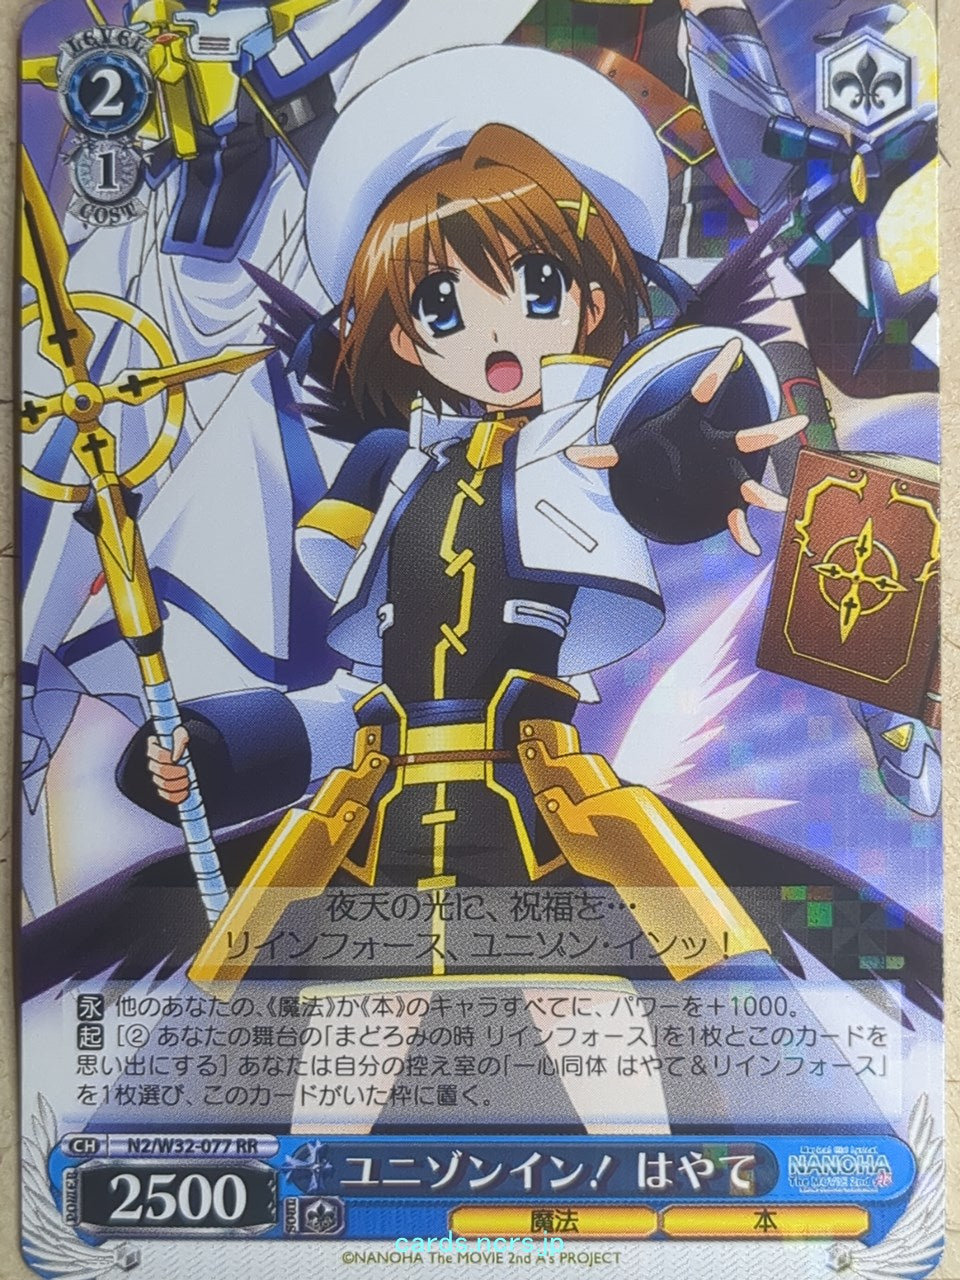 Weiss Schwarz Magical Girl Lyrical Nanoha -Hayate Yagami-   Trading Card N2/W32-077RR